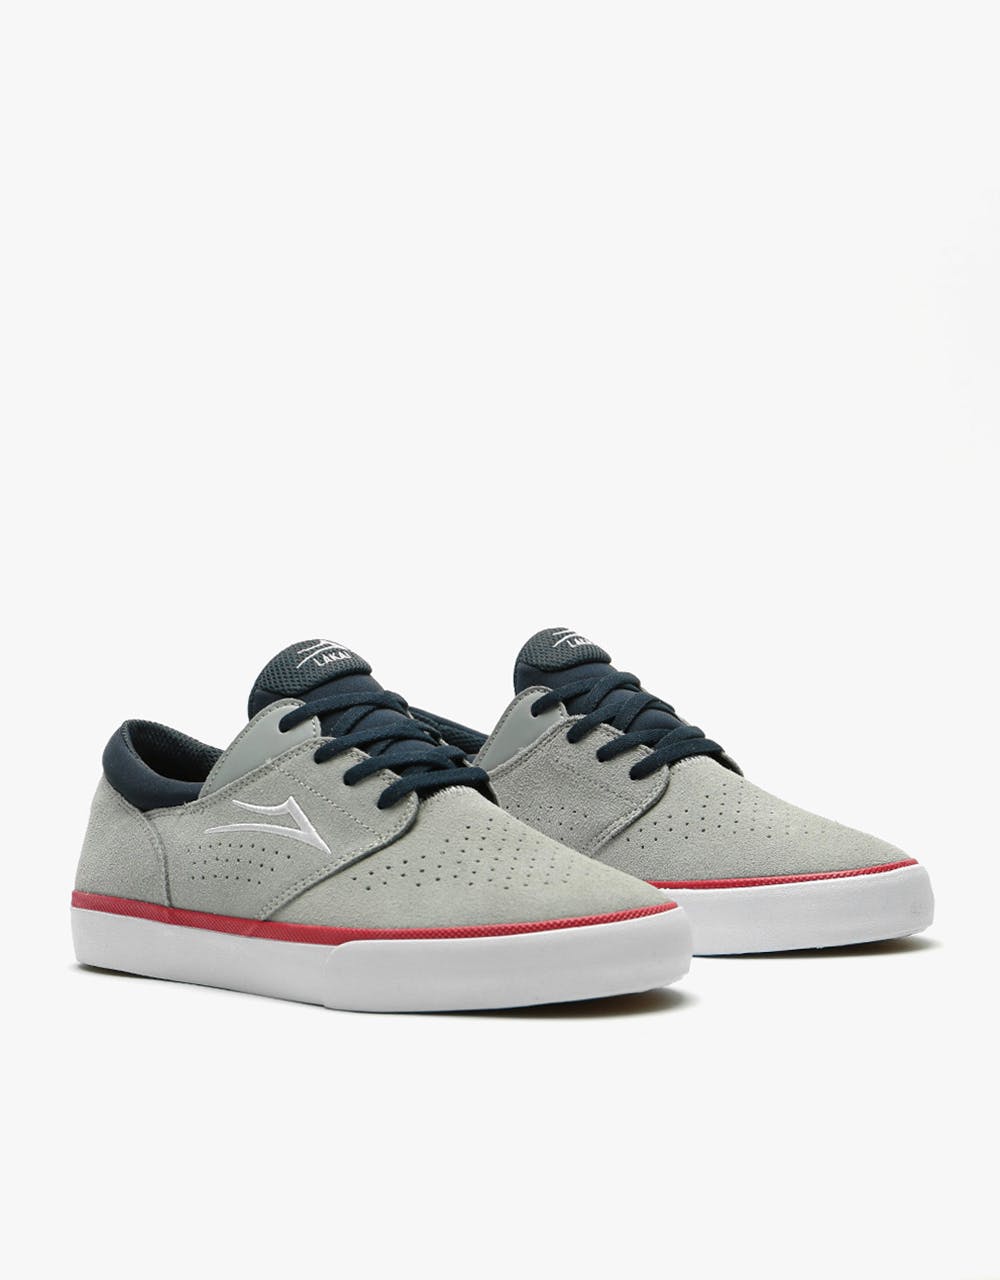 Lakai Freemont Skate Shoes - Light Grey/Navy Suede